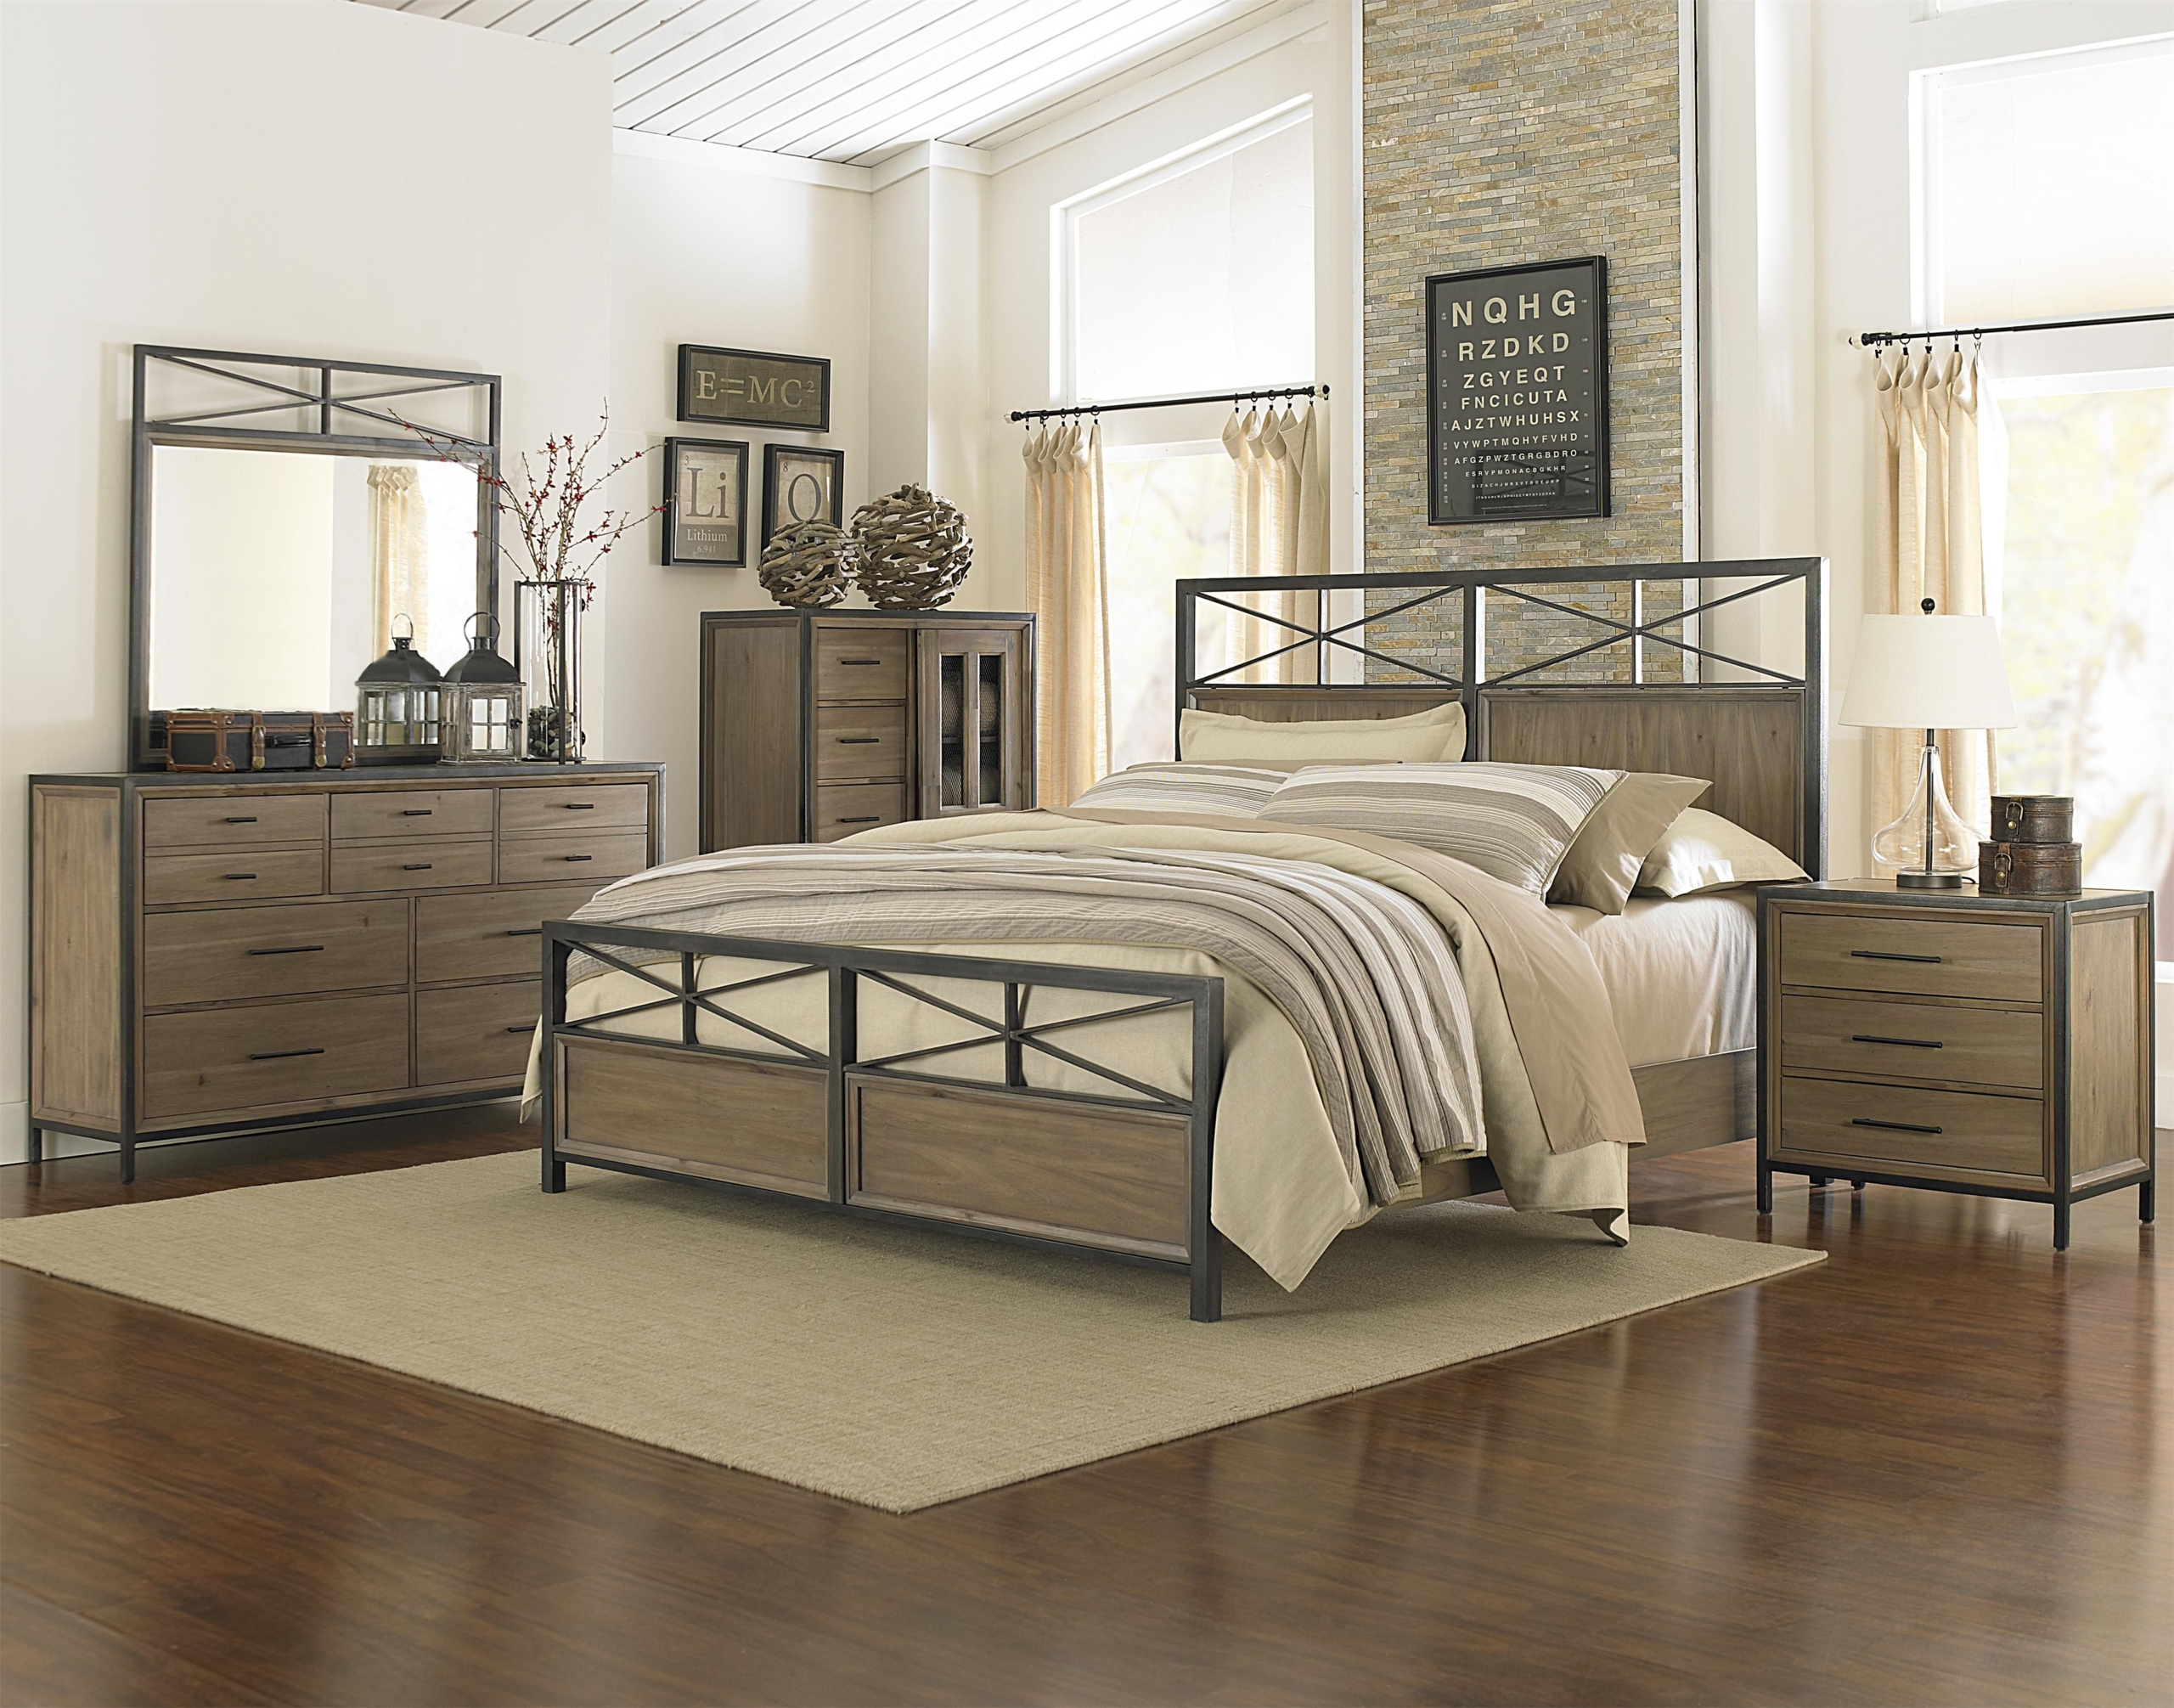 Metal and wood bedroom sets 15